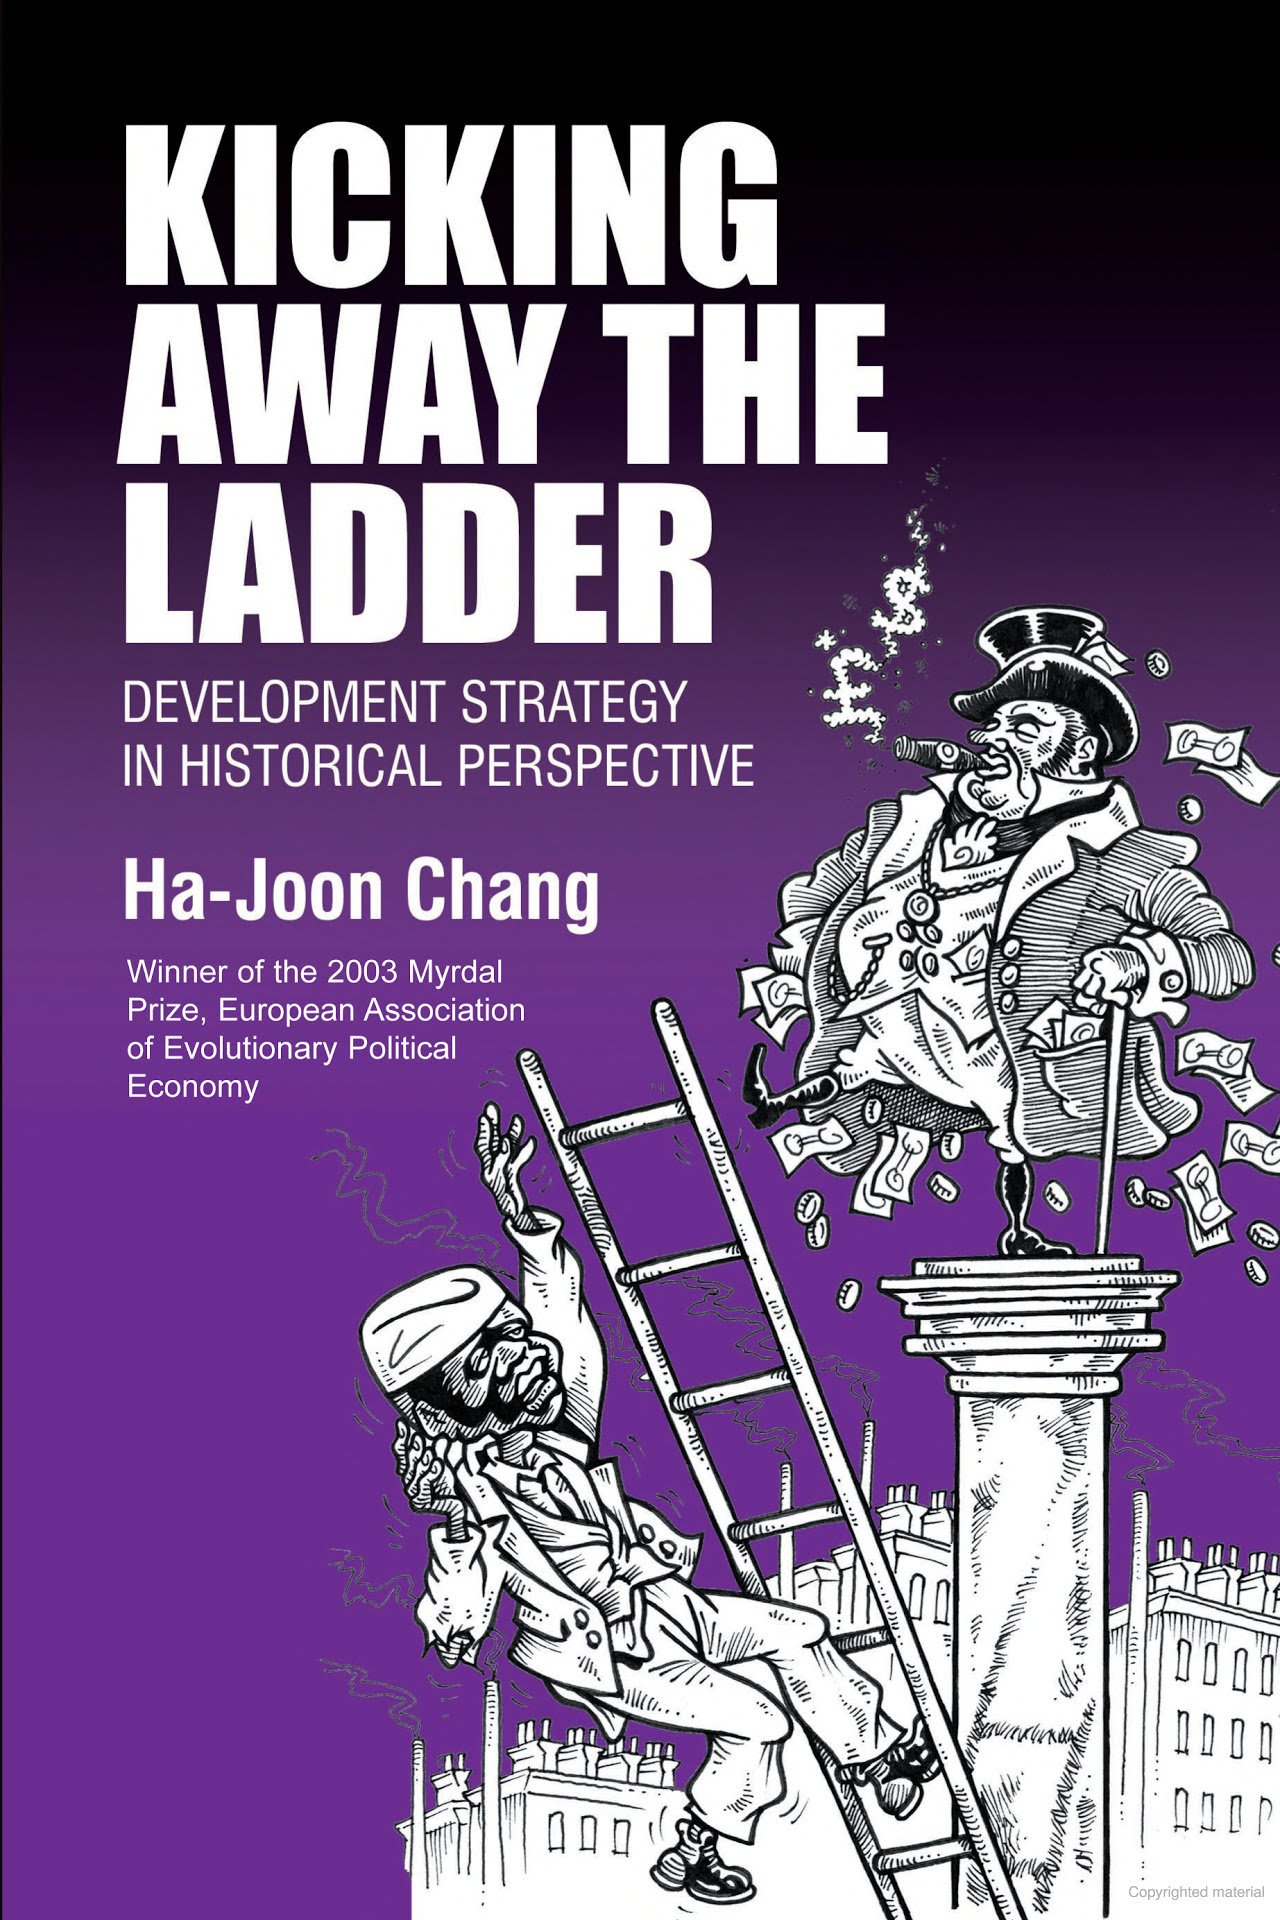 Ha-Joon Chang's Kicking Away The Ladder Theory